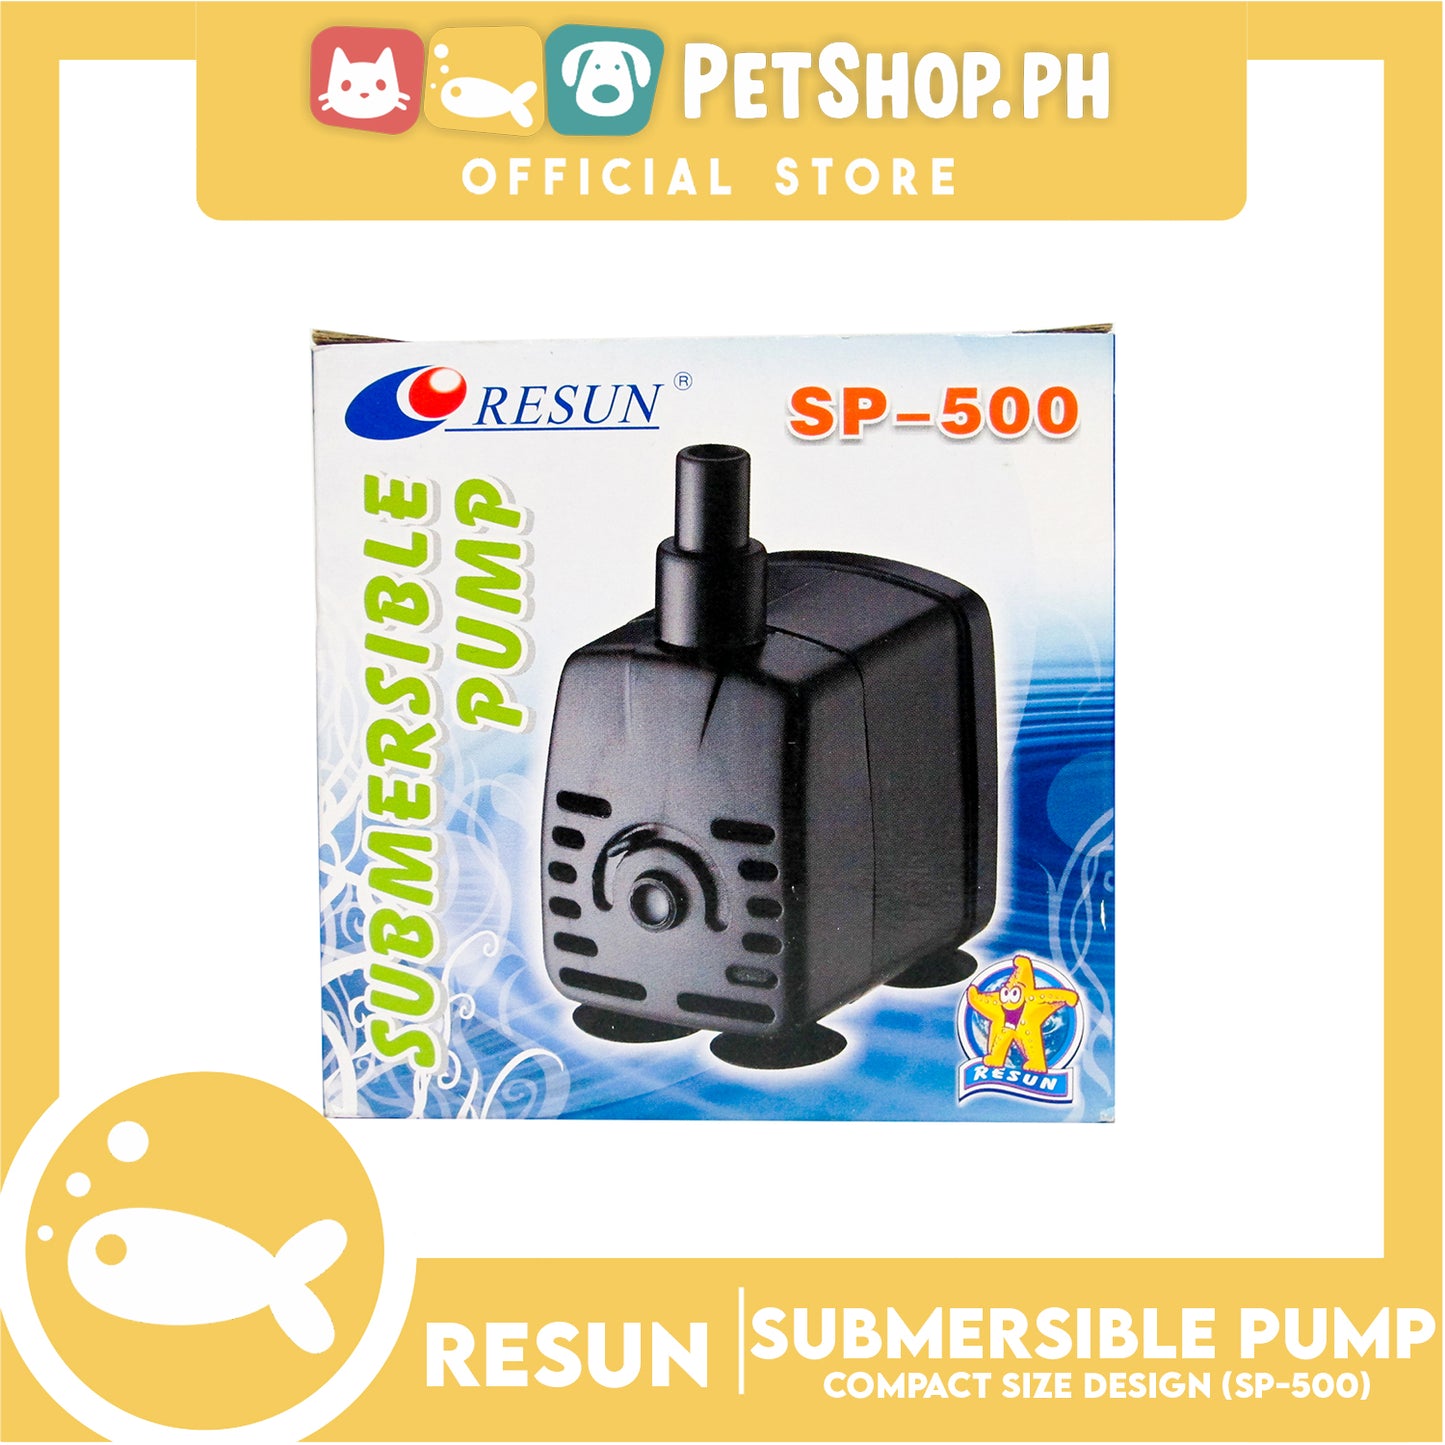 Resun Submersible Water Pump SP-500 for Fish Tank, Pond, Aquarium, Statuary, Hydroponics